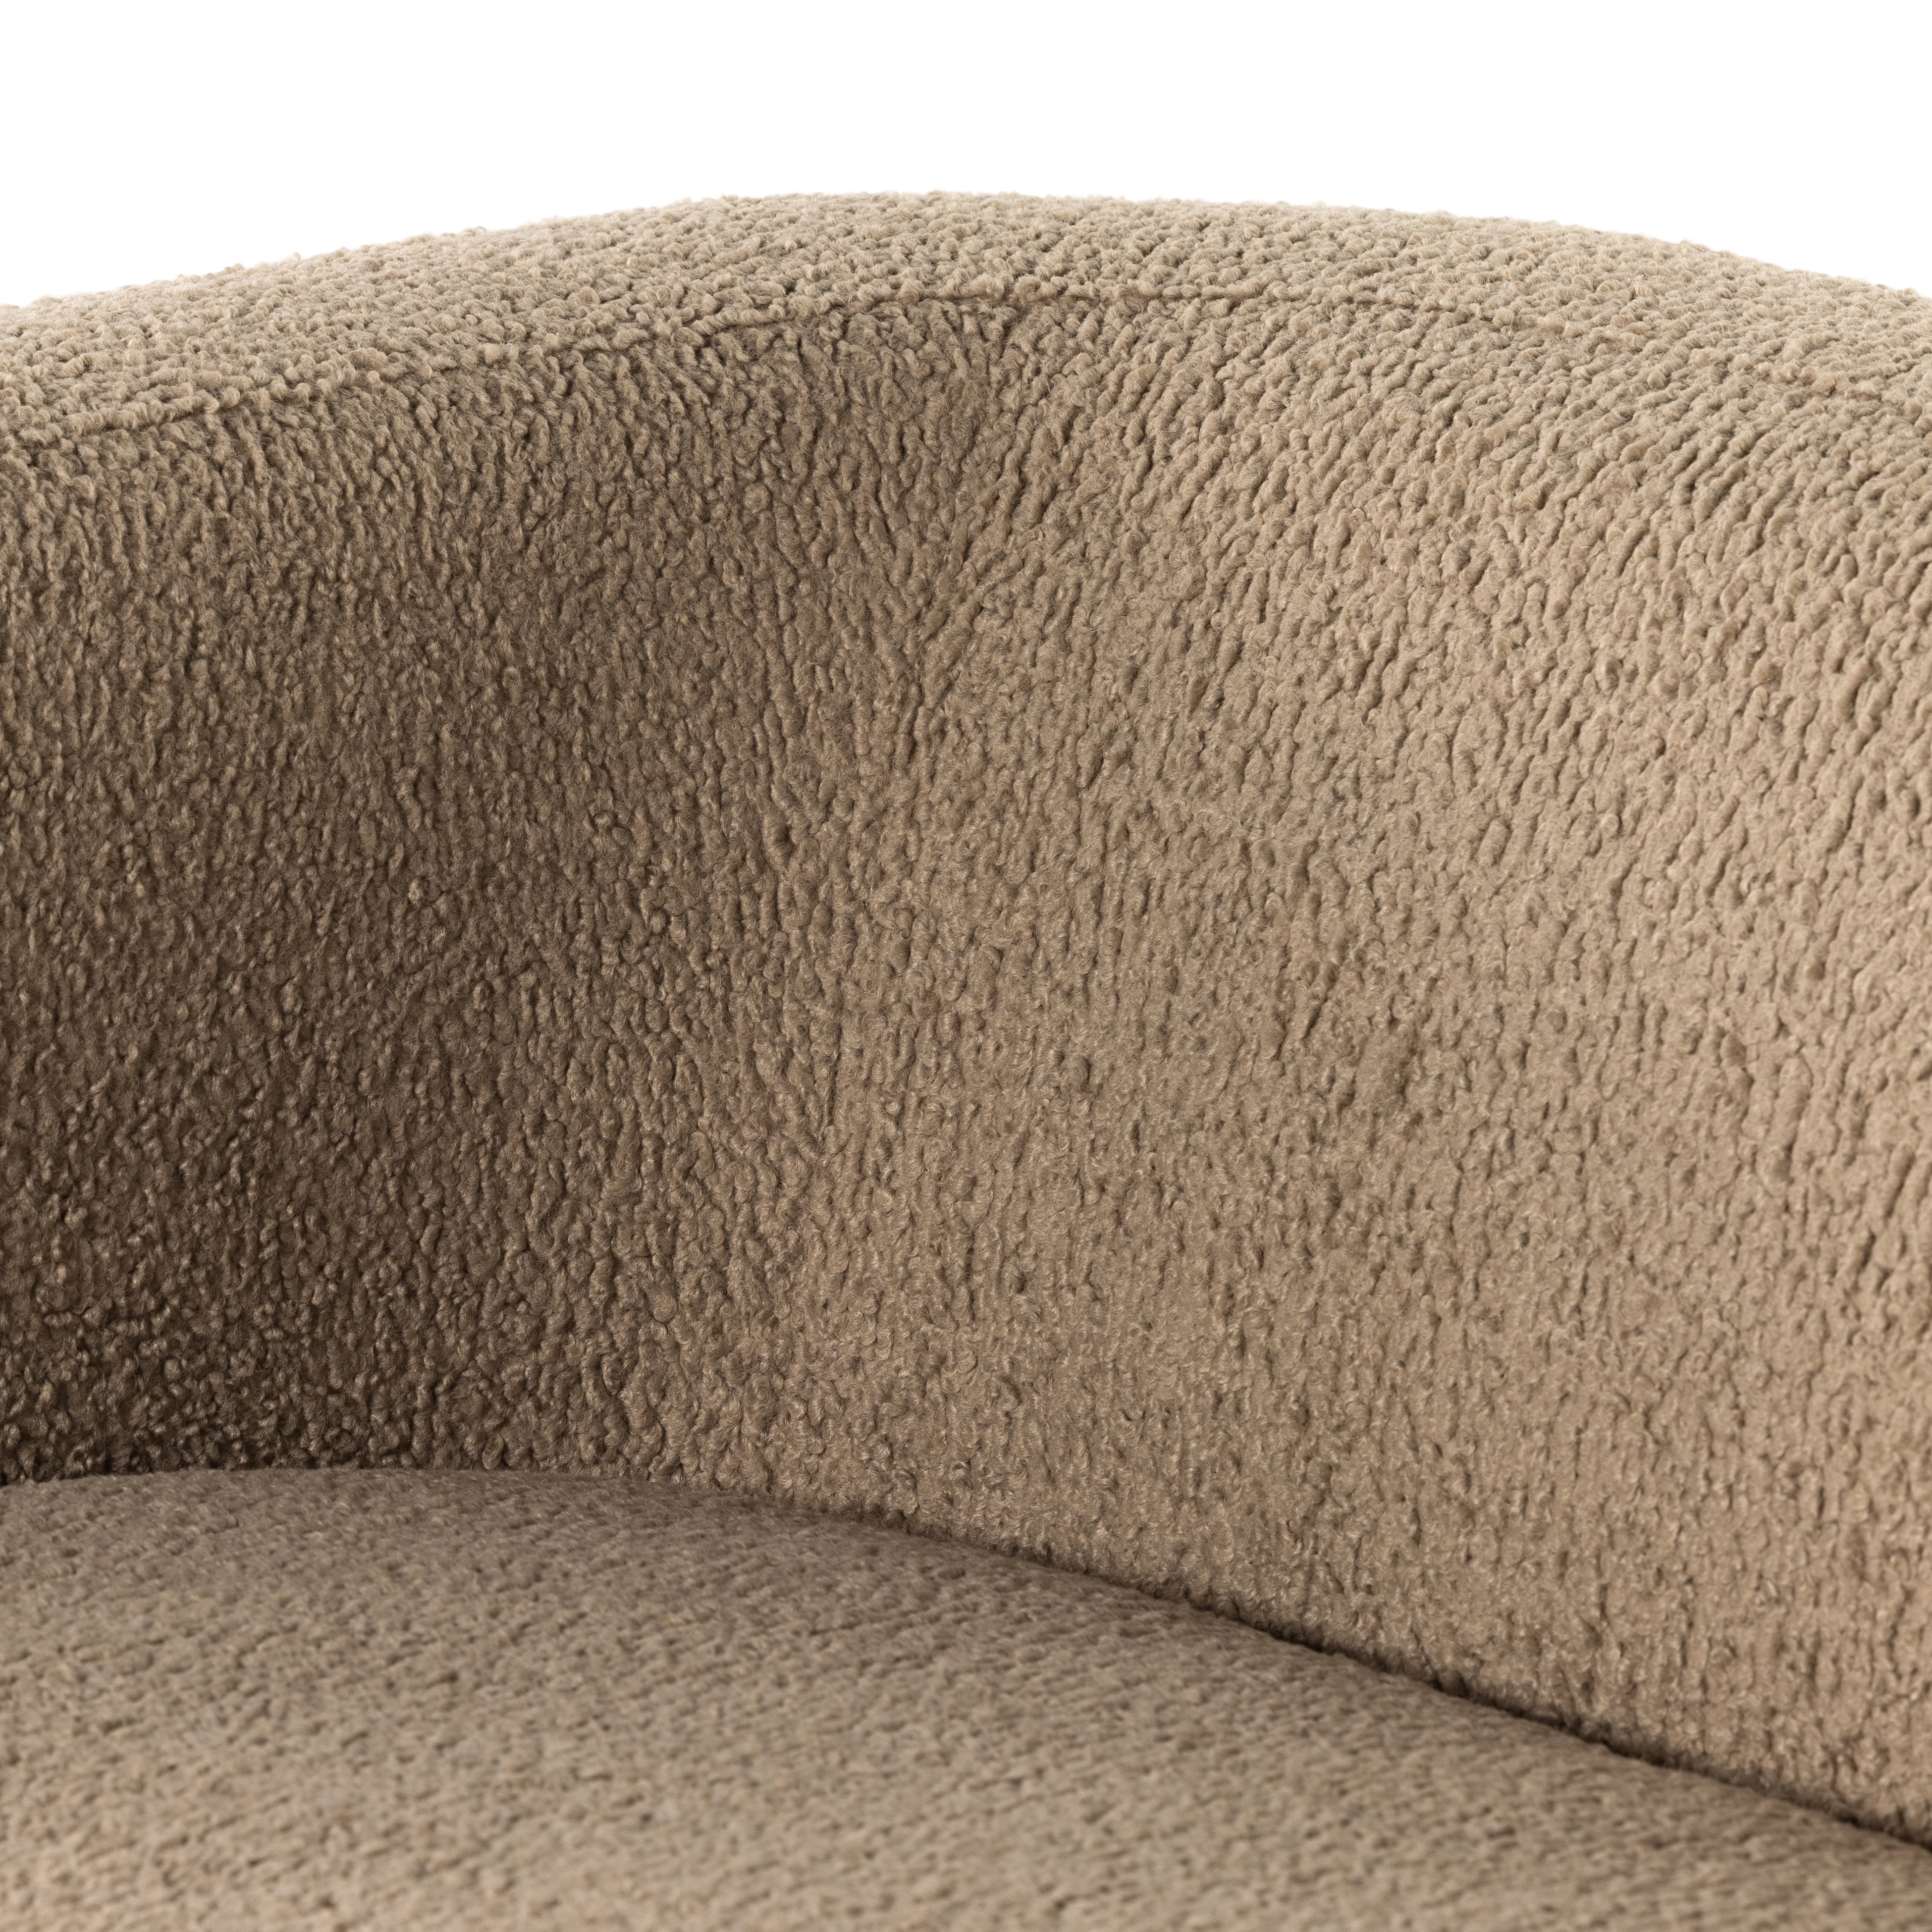 Gidget Sofa - Sheepskin Camel - Image 11